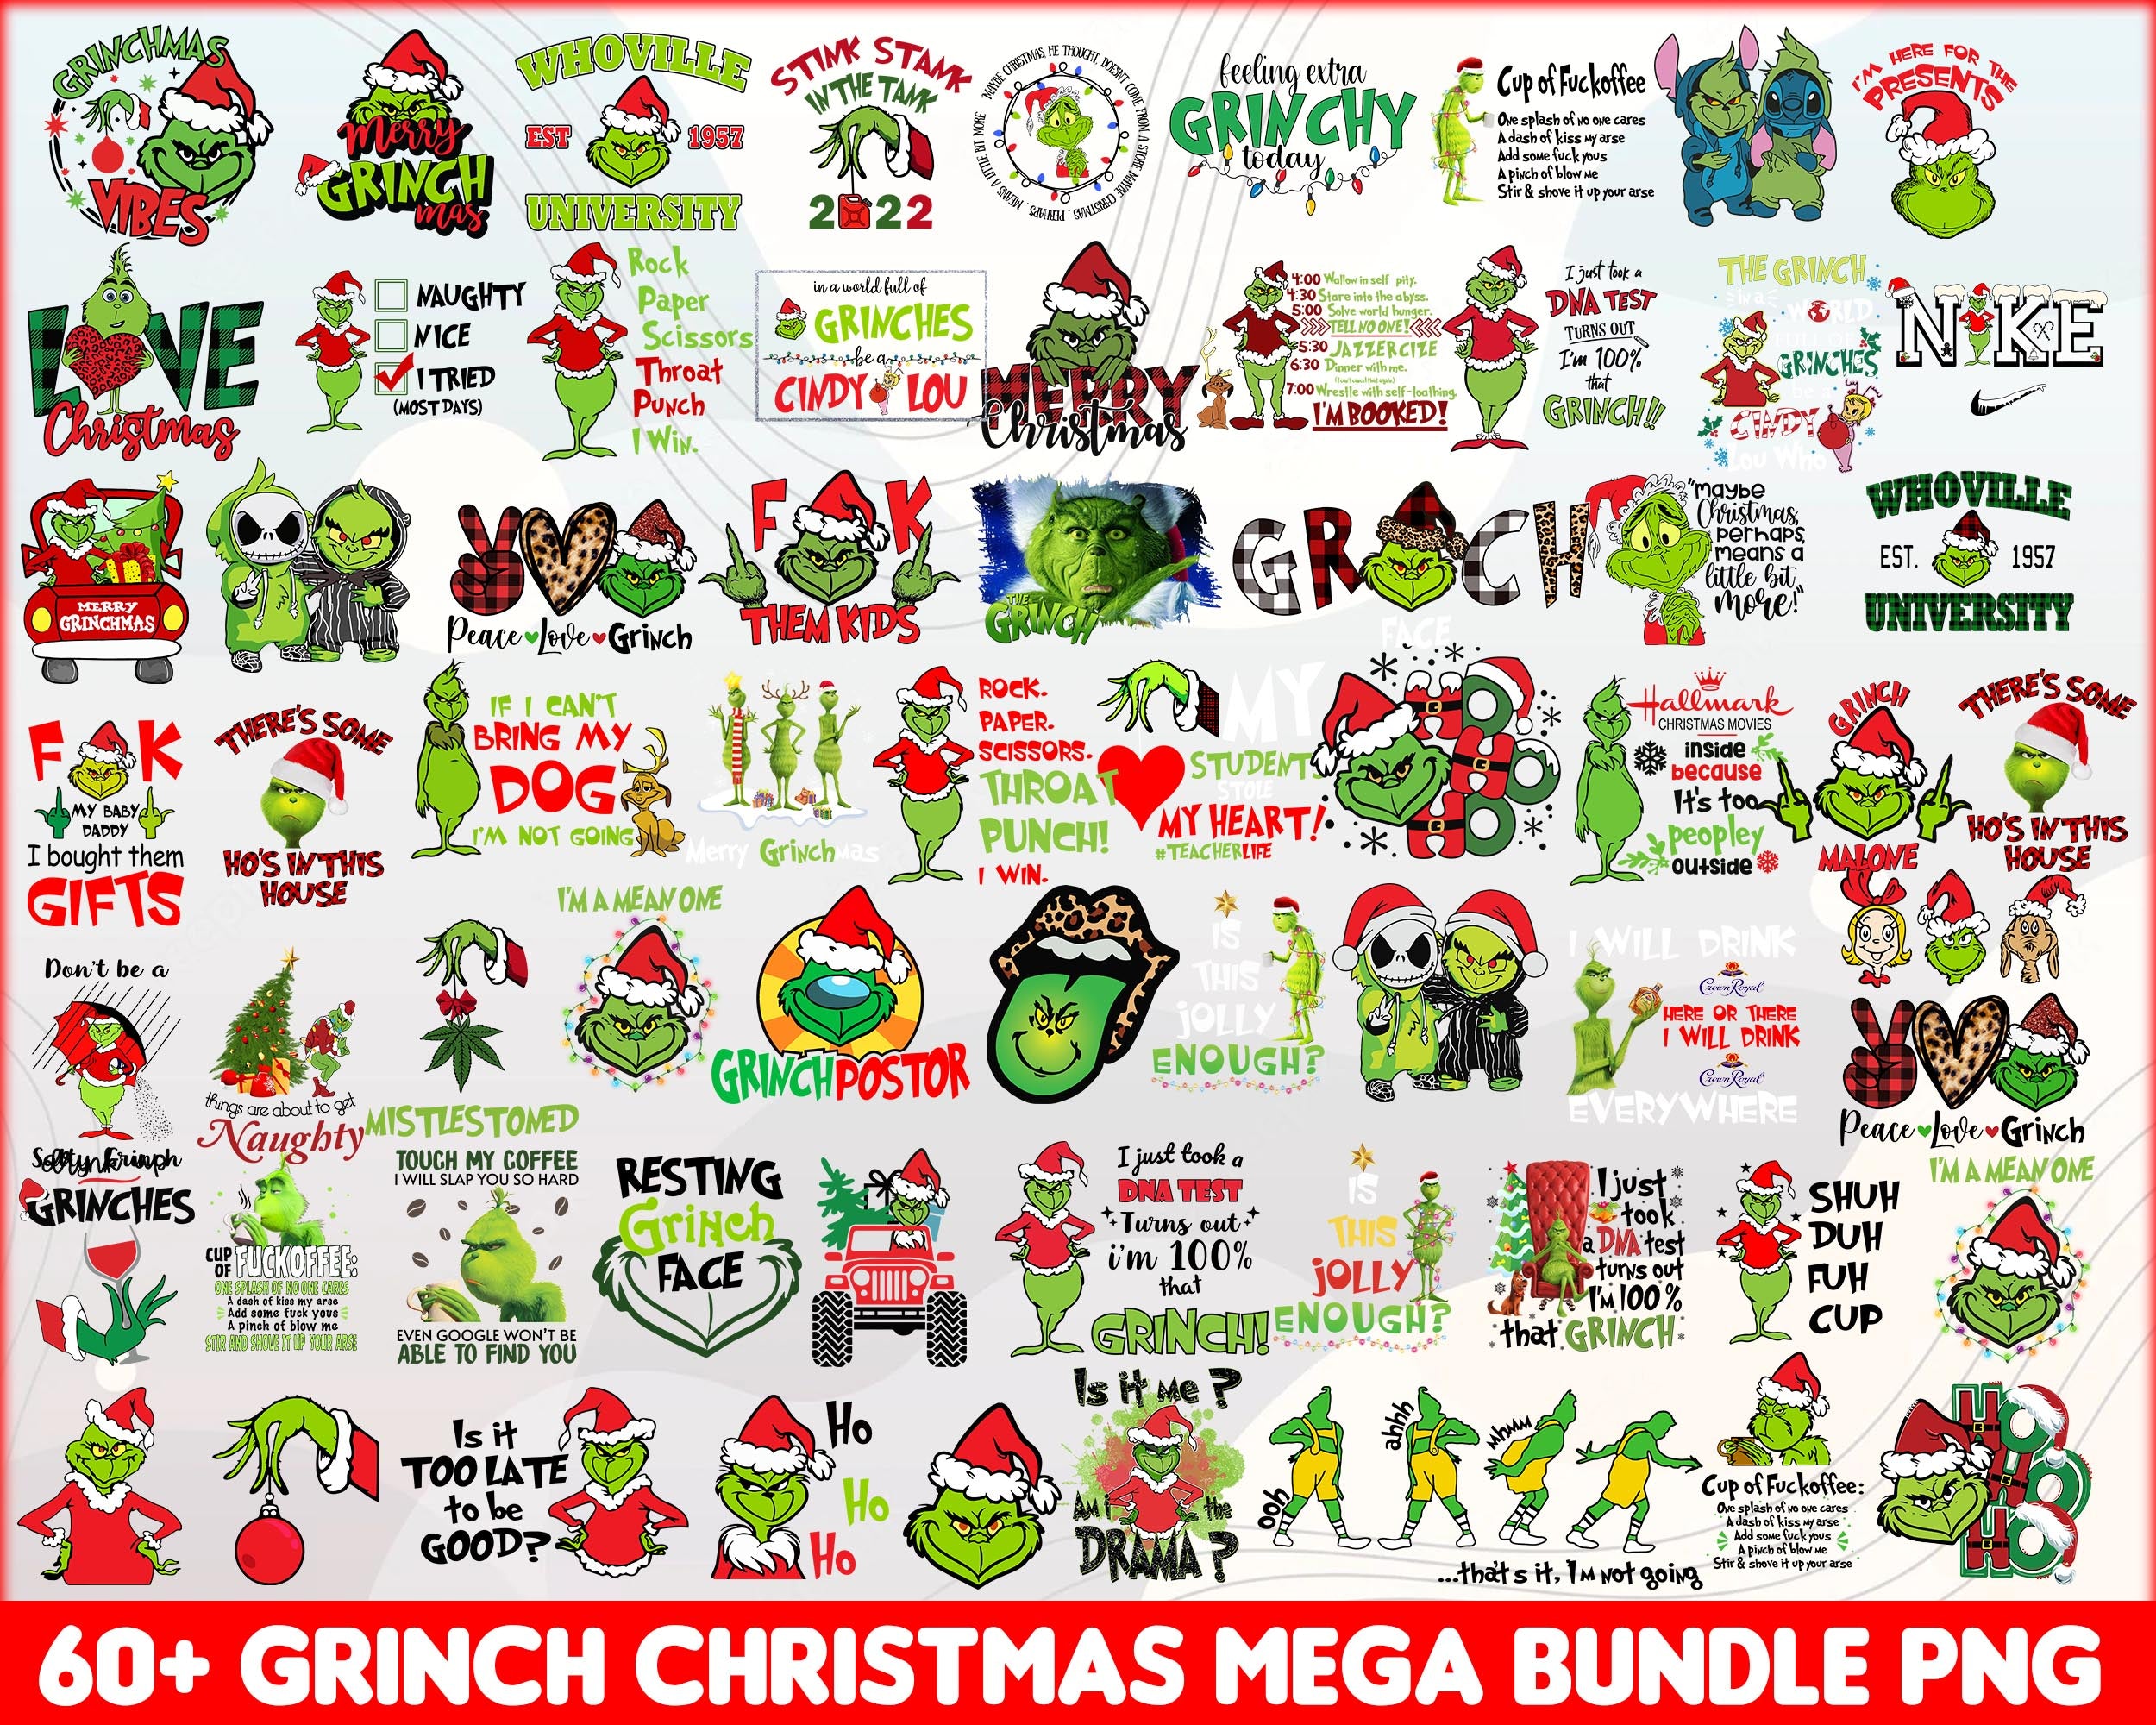 60+ Grinch Christmas Bundle PNG, Grinch png bundle, Grinch Xmas Cutting Image, Christmas Grinch svg